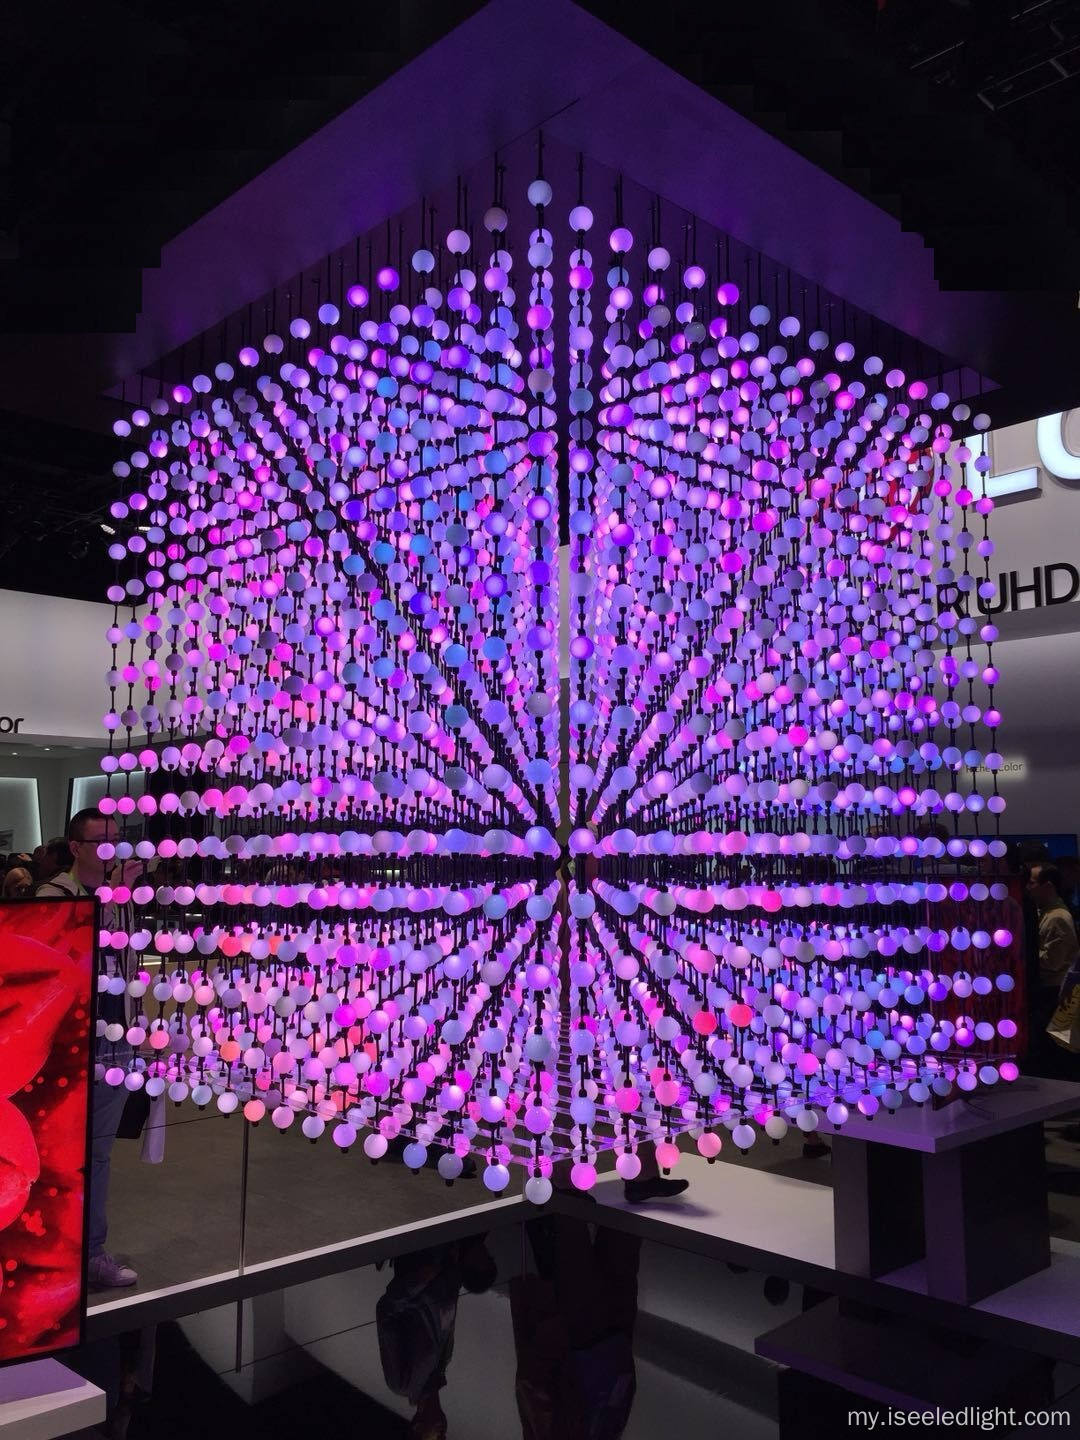 Crystal LED Ball String အရောင် DMX ထိန်းချုပ်မှုပြောင်းလဲ